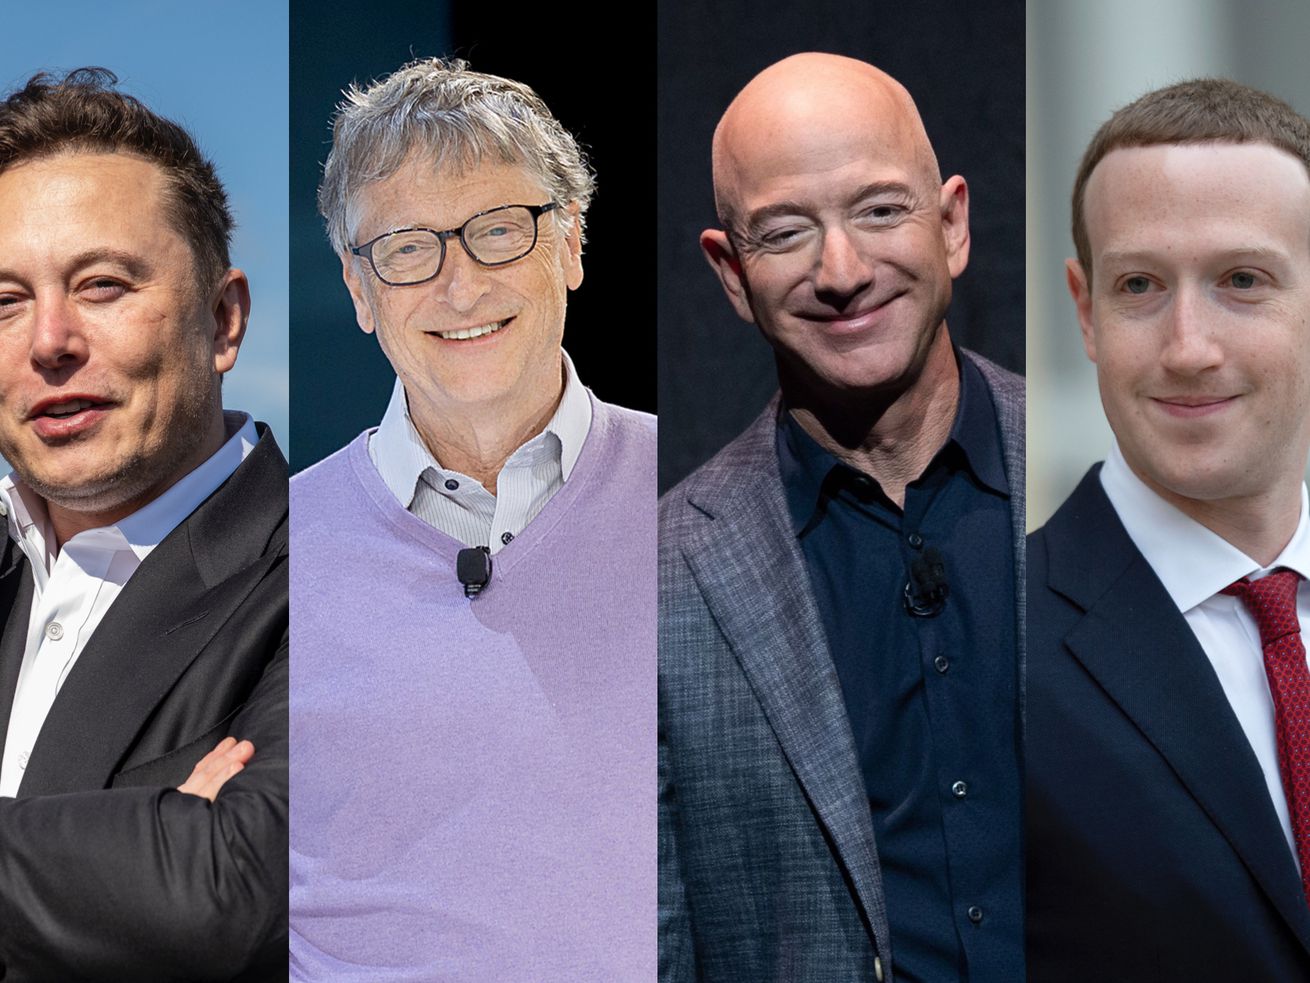 Photos of Elon Musk, Bill Gates, Jeff Bezos, and Mark Zuckerberg.